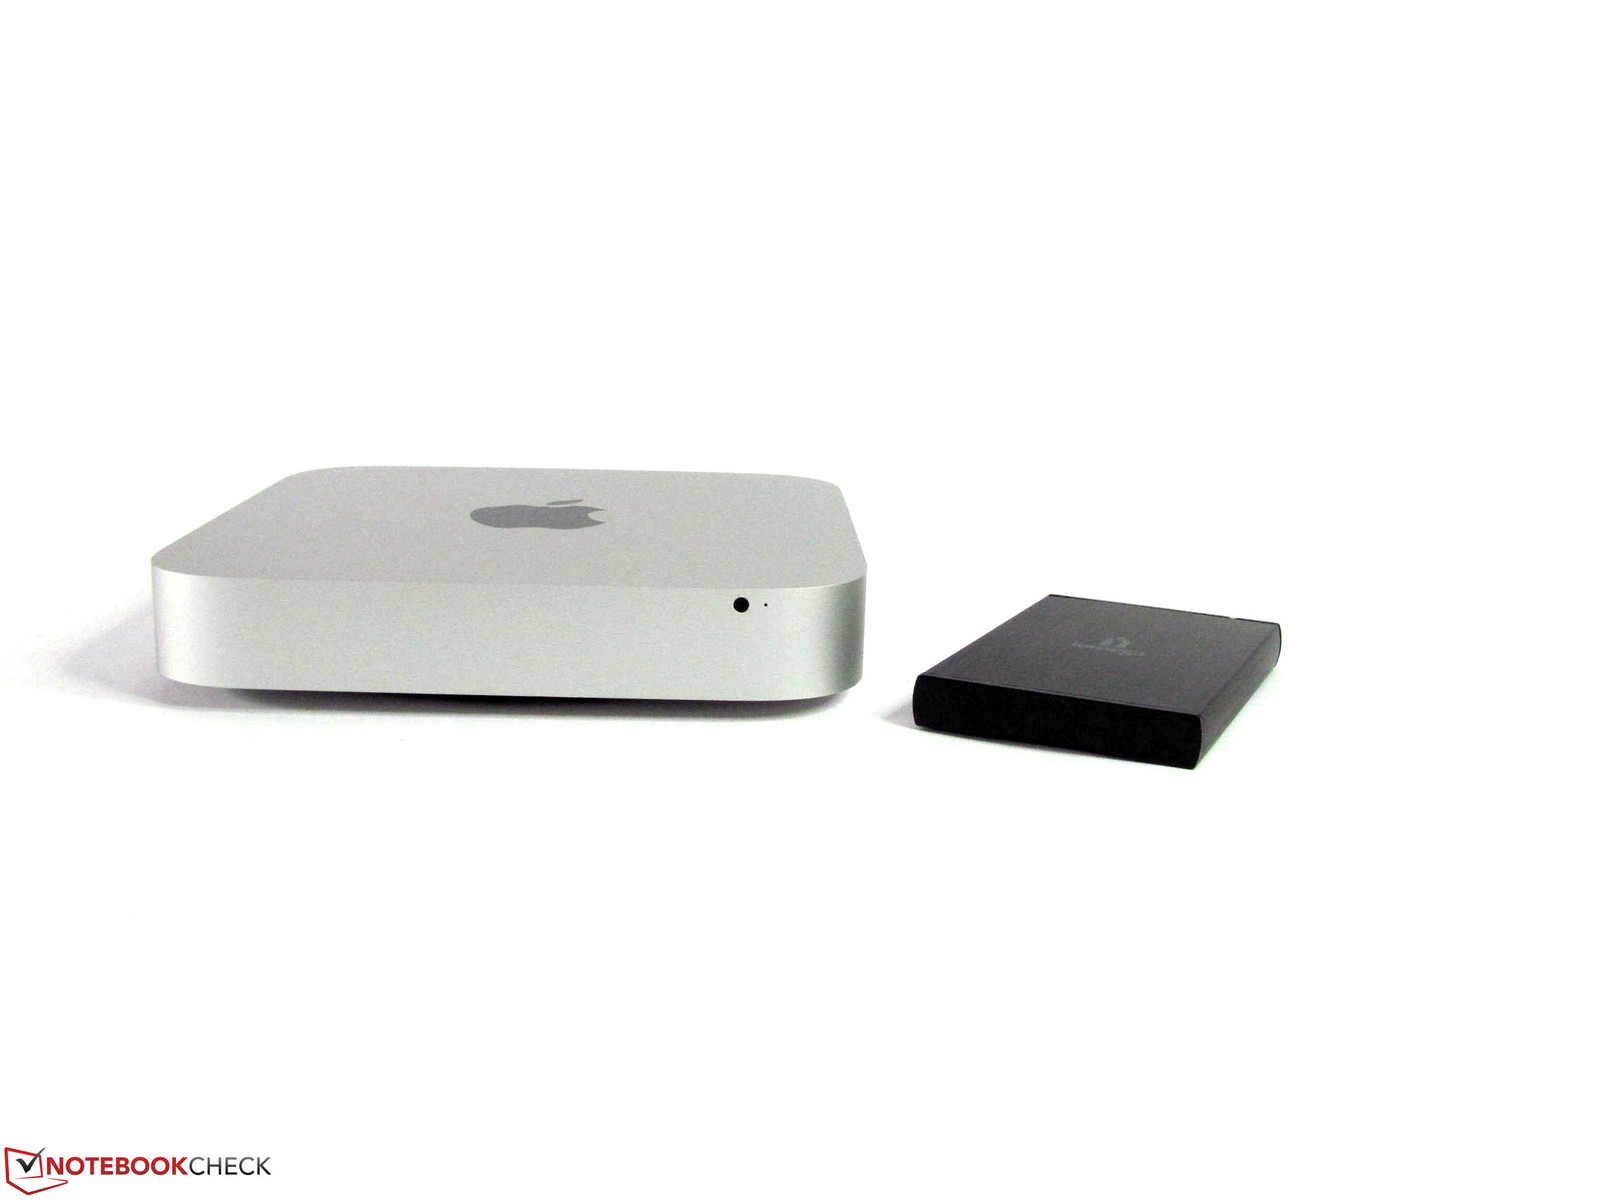 Review Apple Mac mini (Mid 2011) MC815D/A - NotebookCheck.net Reviews